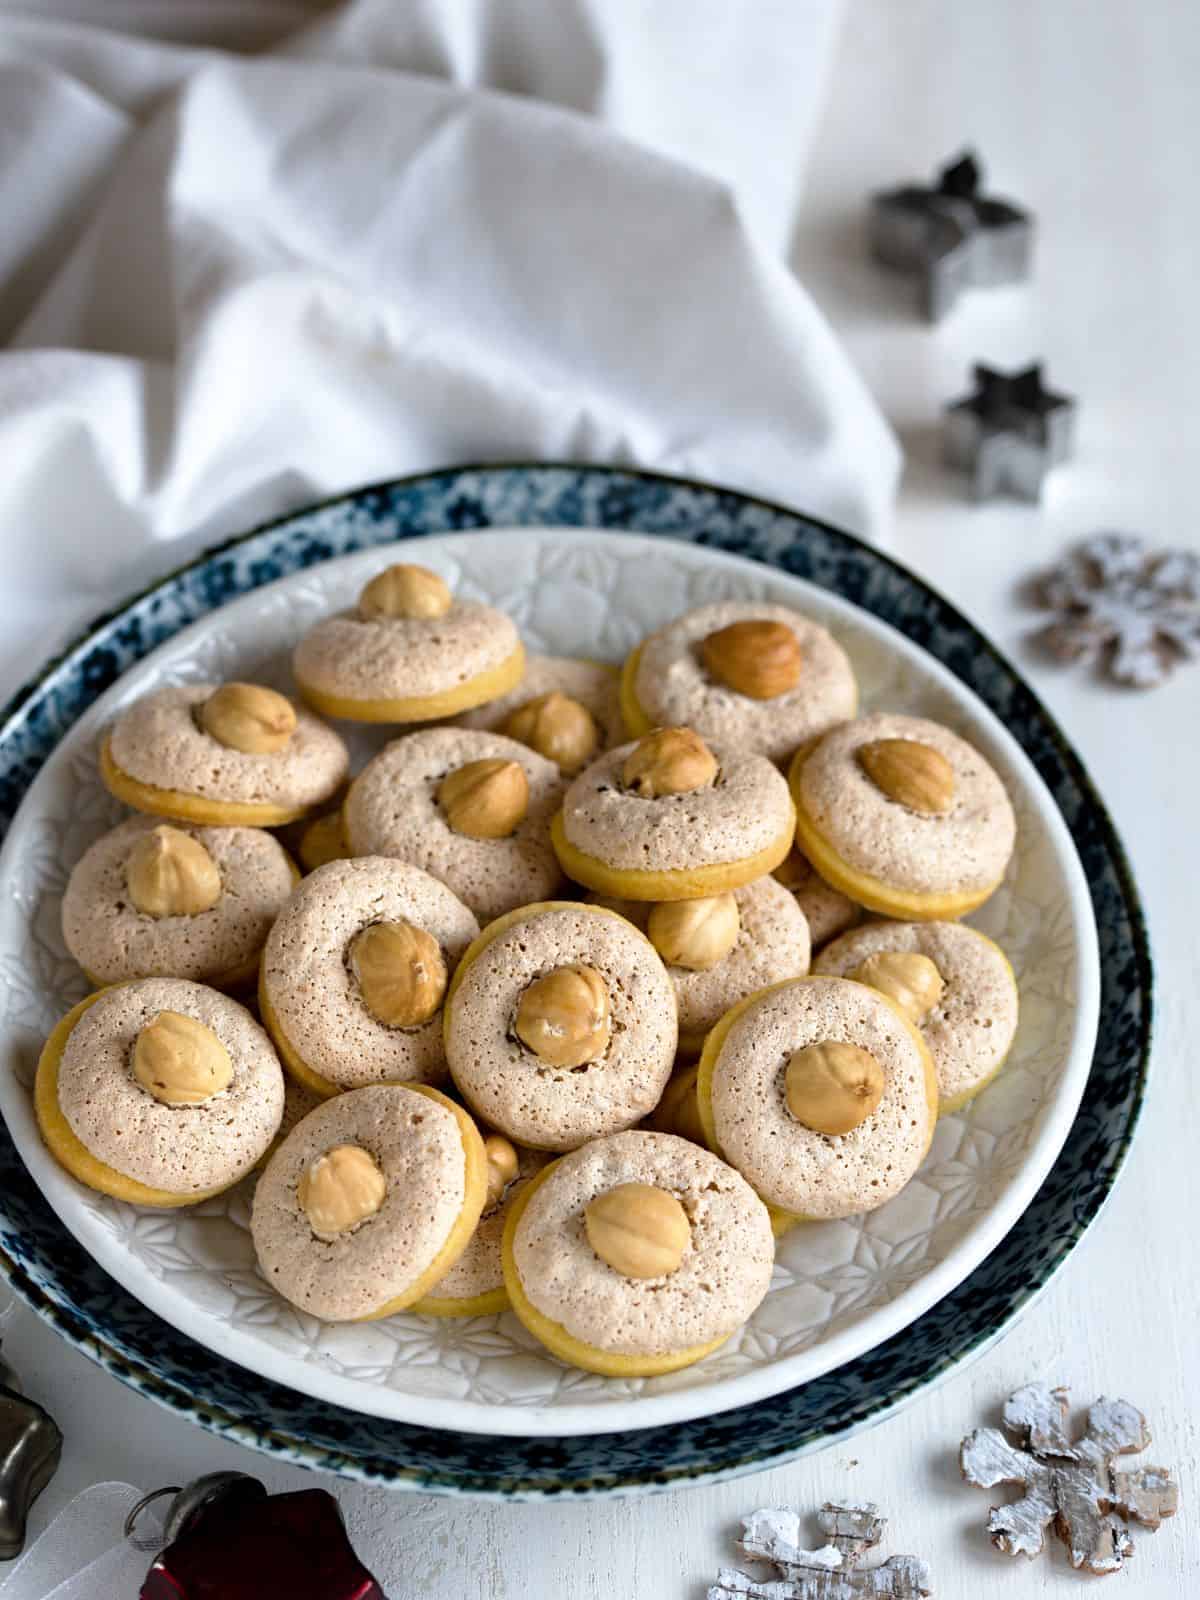 Sugar cookies with walnut meringe topping, Czech myslivecké knoflíky Christmas cookie.